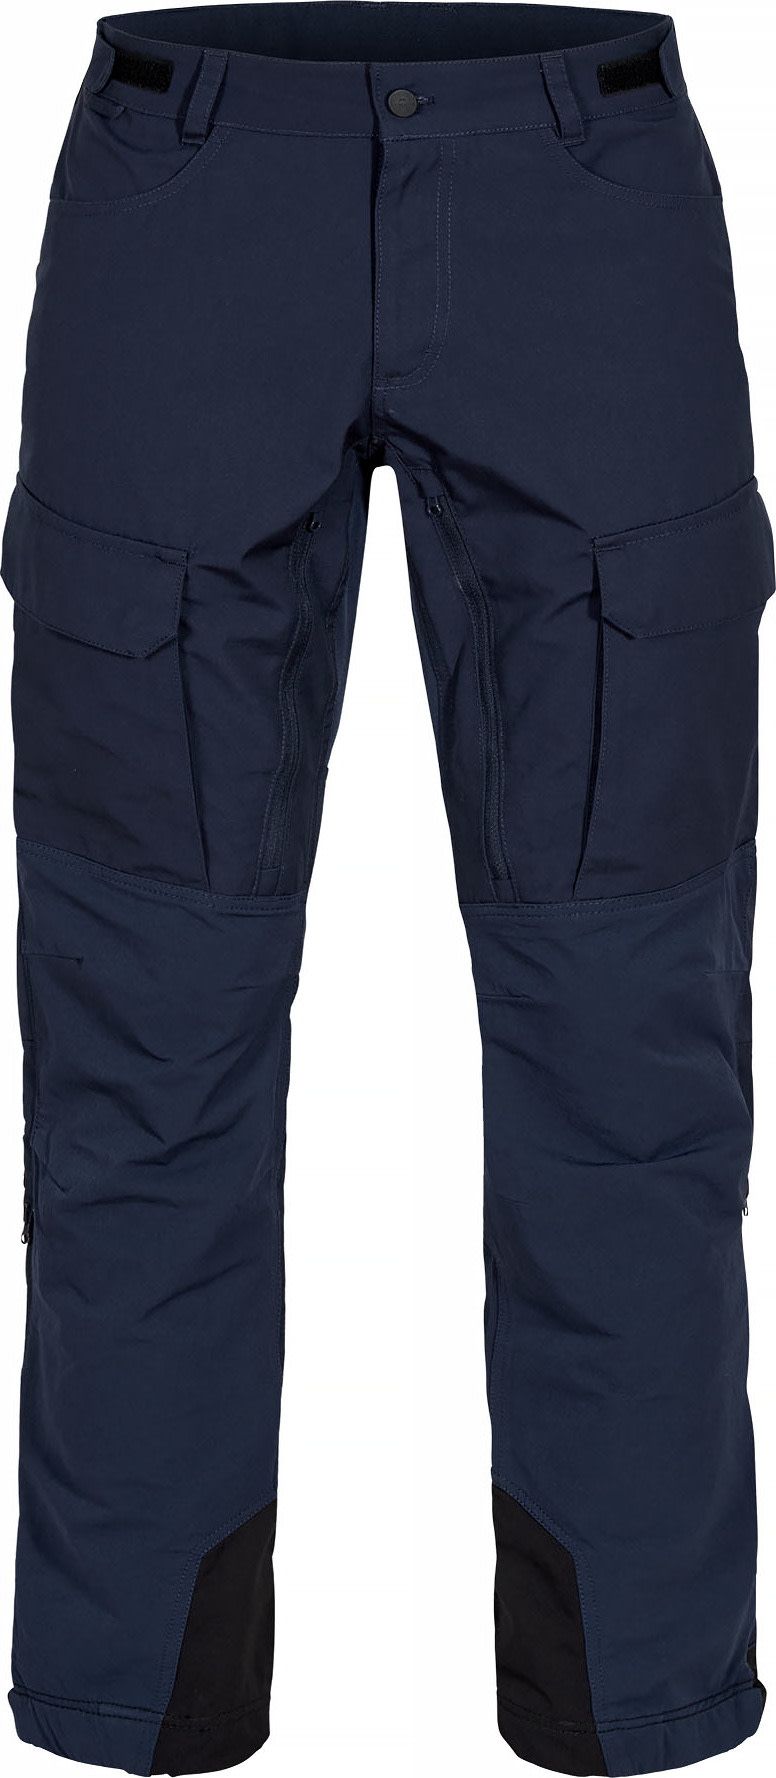 Men's Granheim Hiking Pants Navy blazer